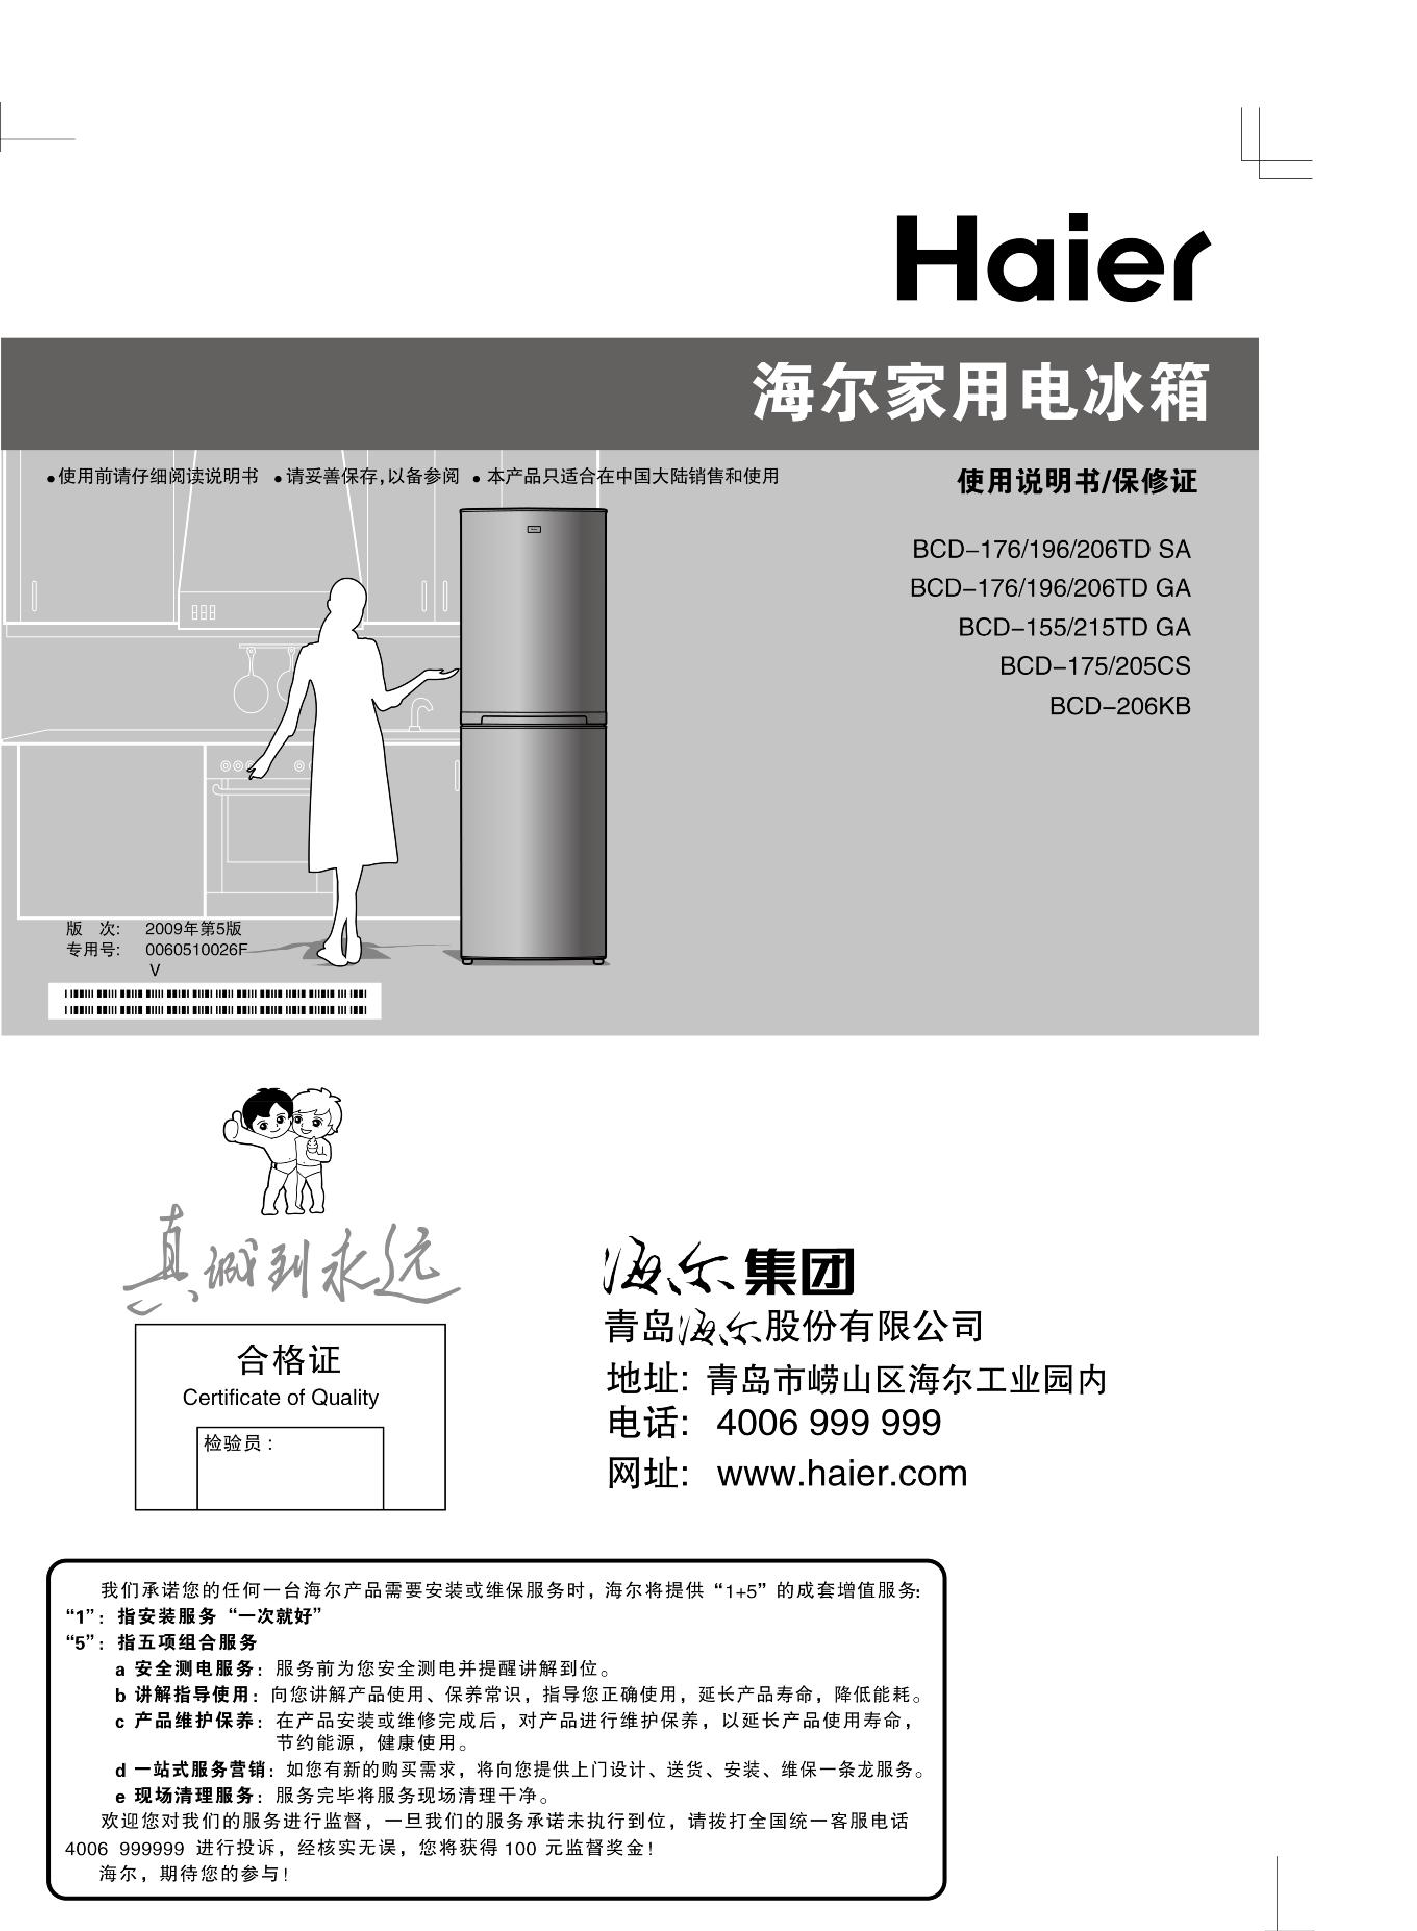 海尔 Haier BCD-155TD GA, BCD-175CS, BCD-206KB 使用说明书 封面